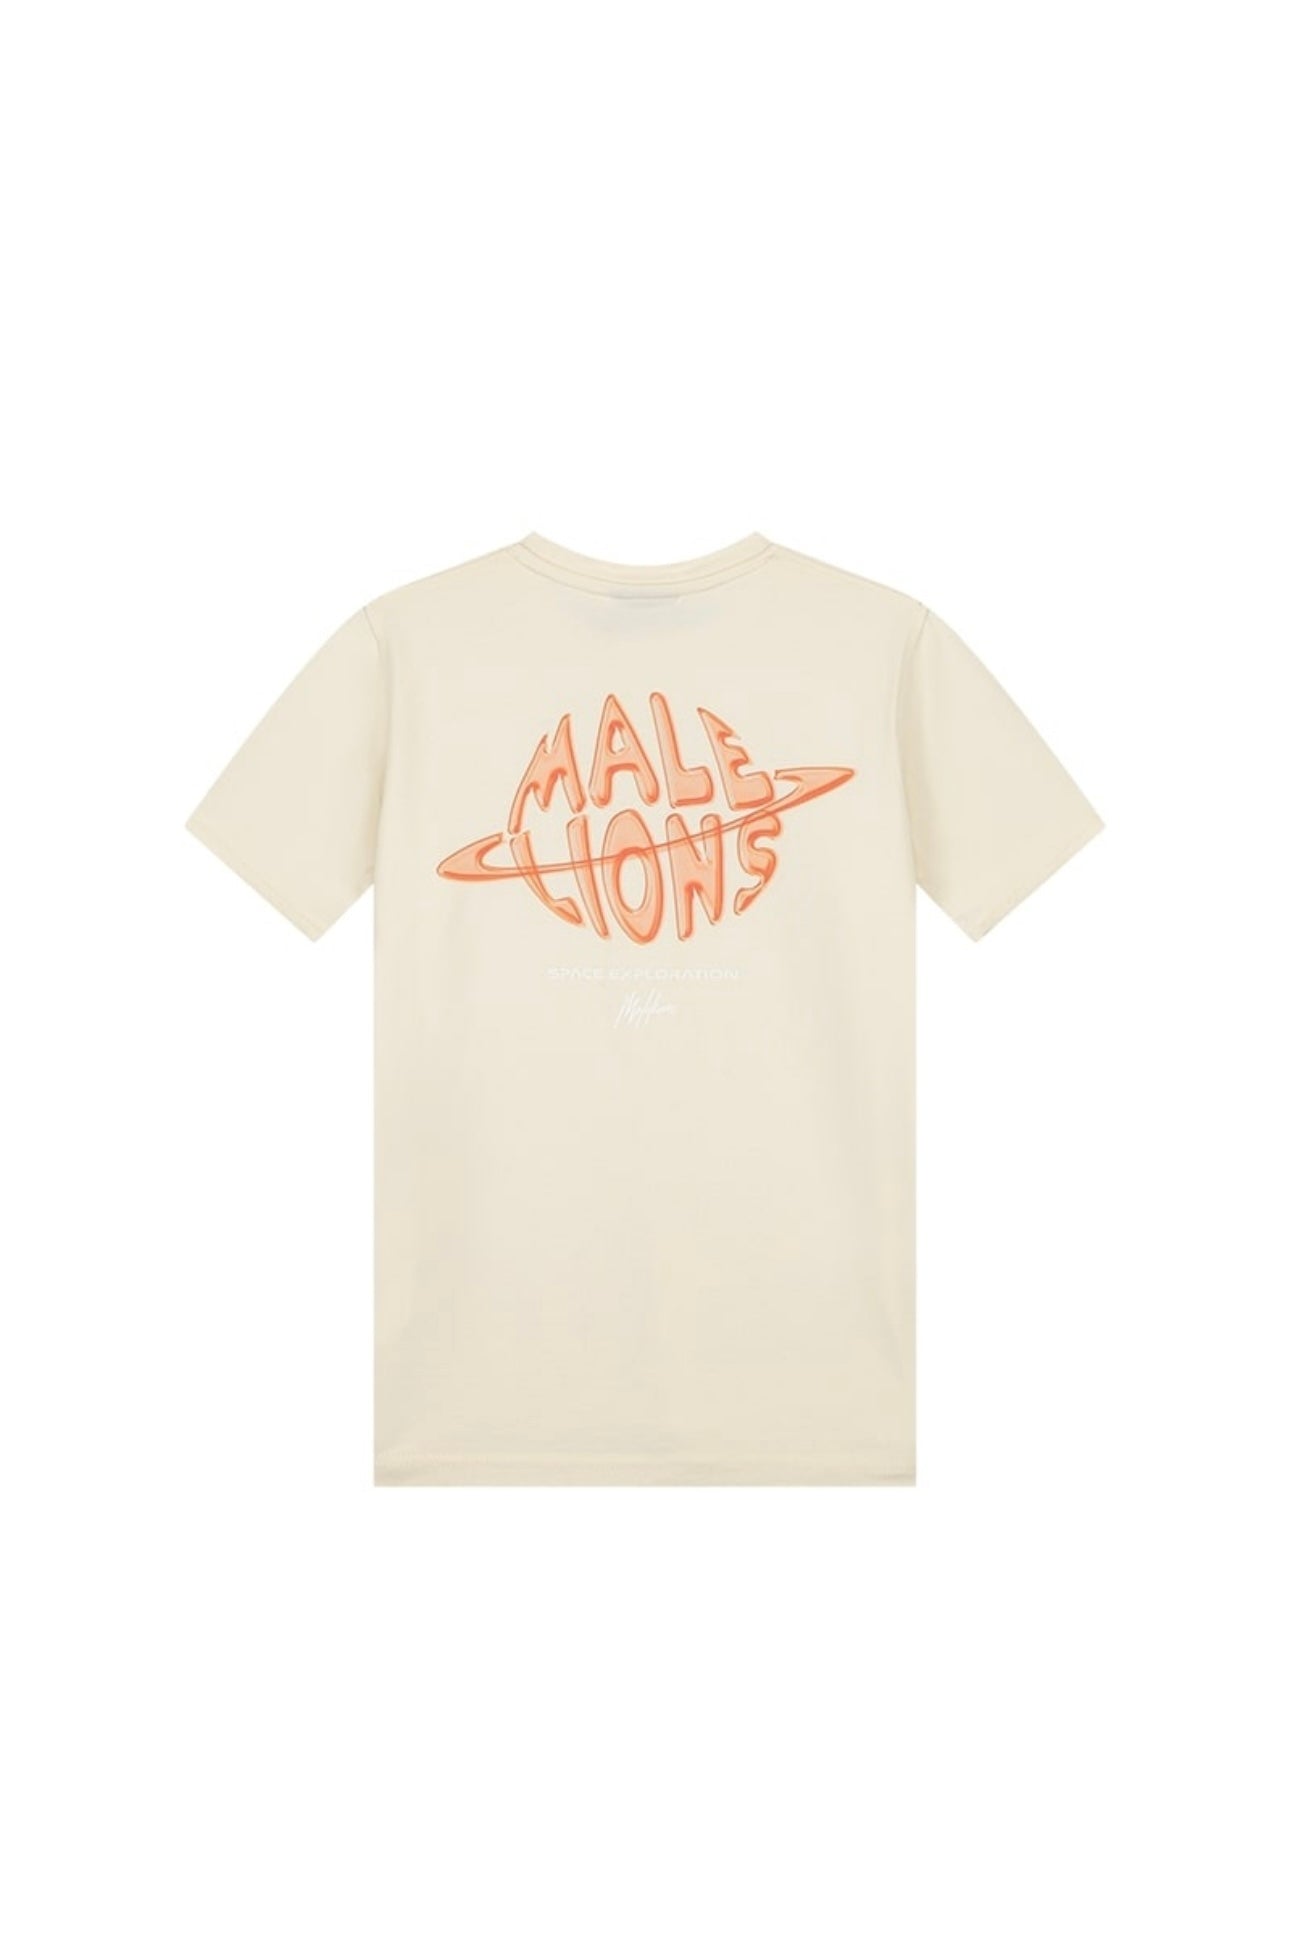 Malelions junior space t-shirt - beige/orange